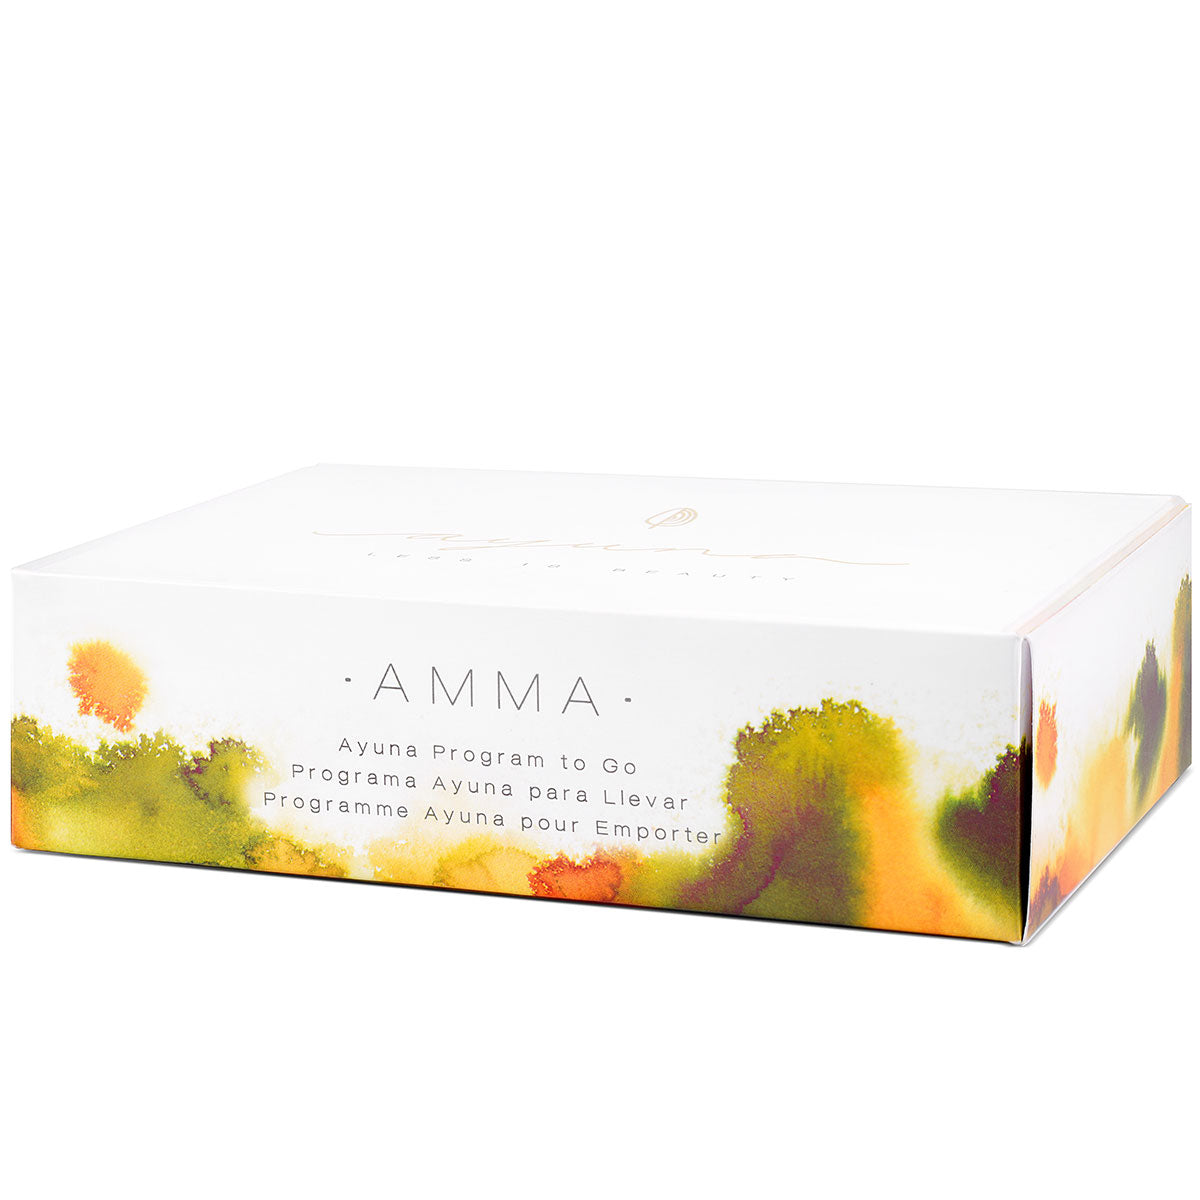 Set Ayuna Program to Go Light Amma: sapone, crema, essenza, balsamo, velo, trattamento viso